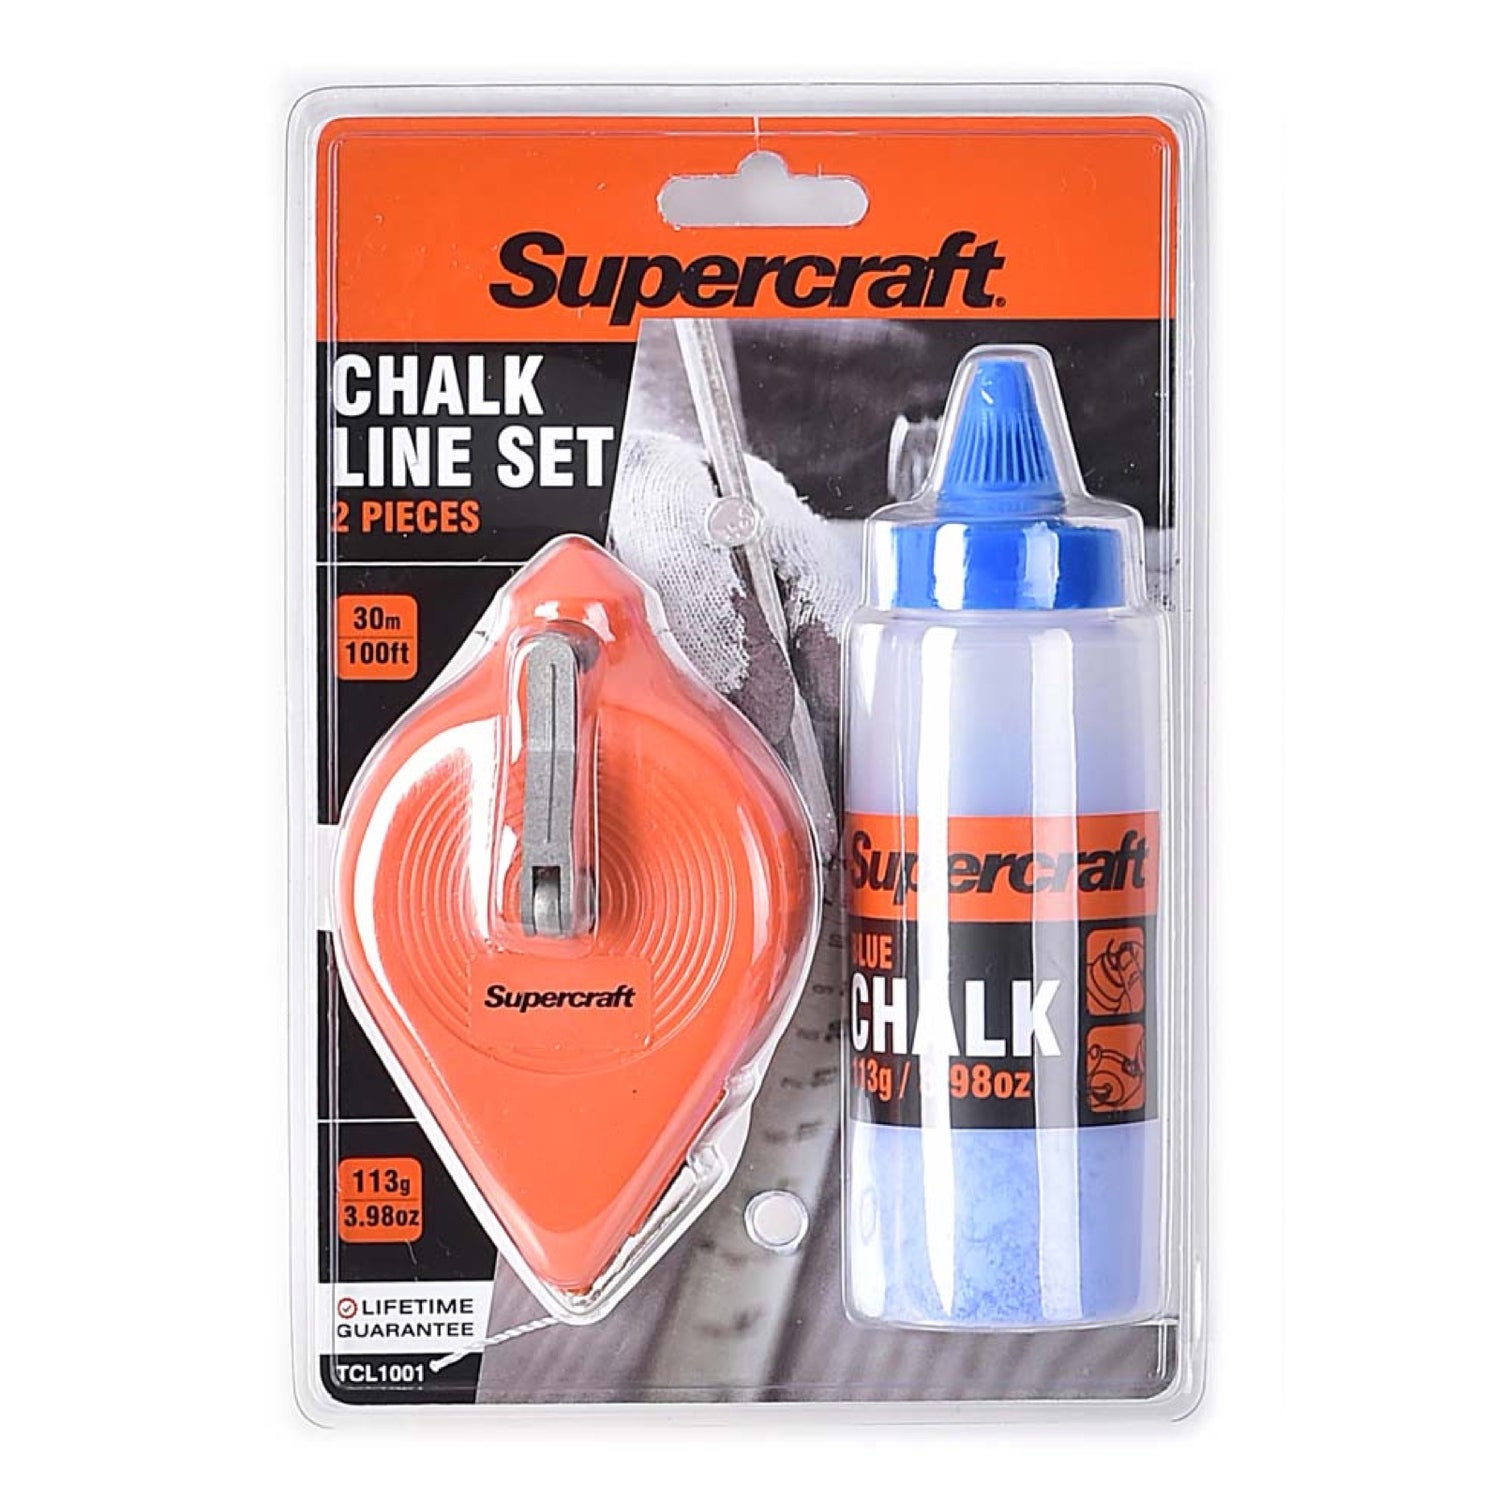 Supercraft Chalk Line Set